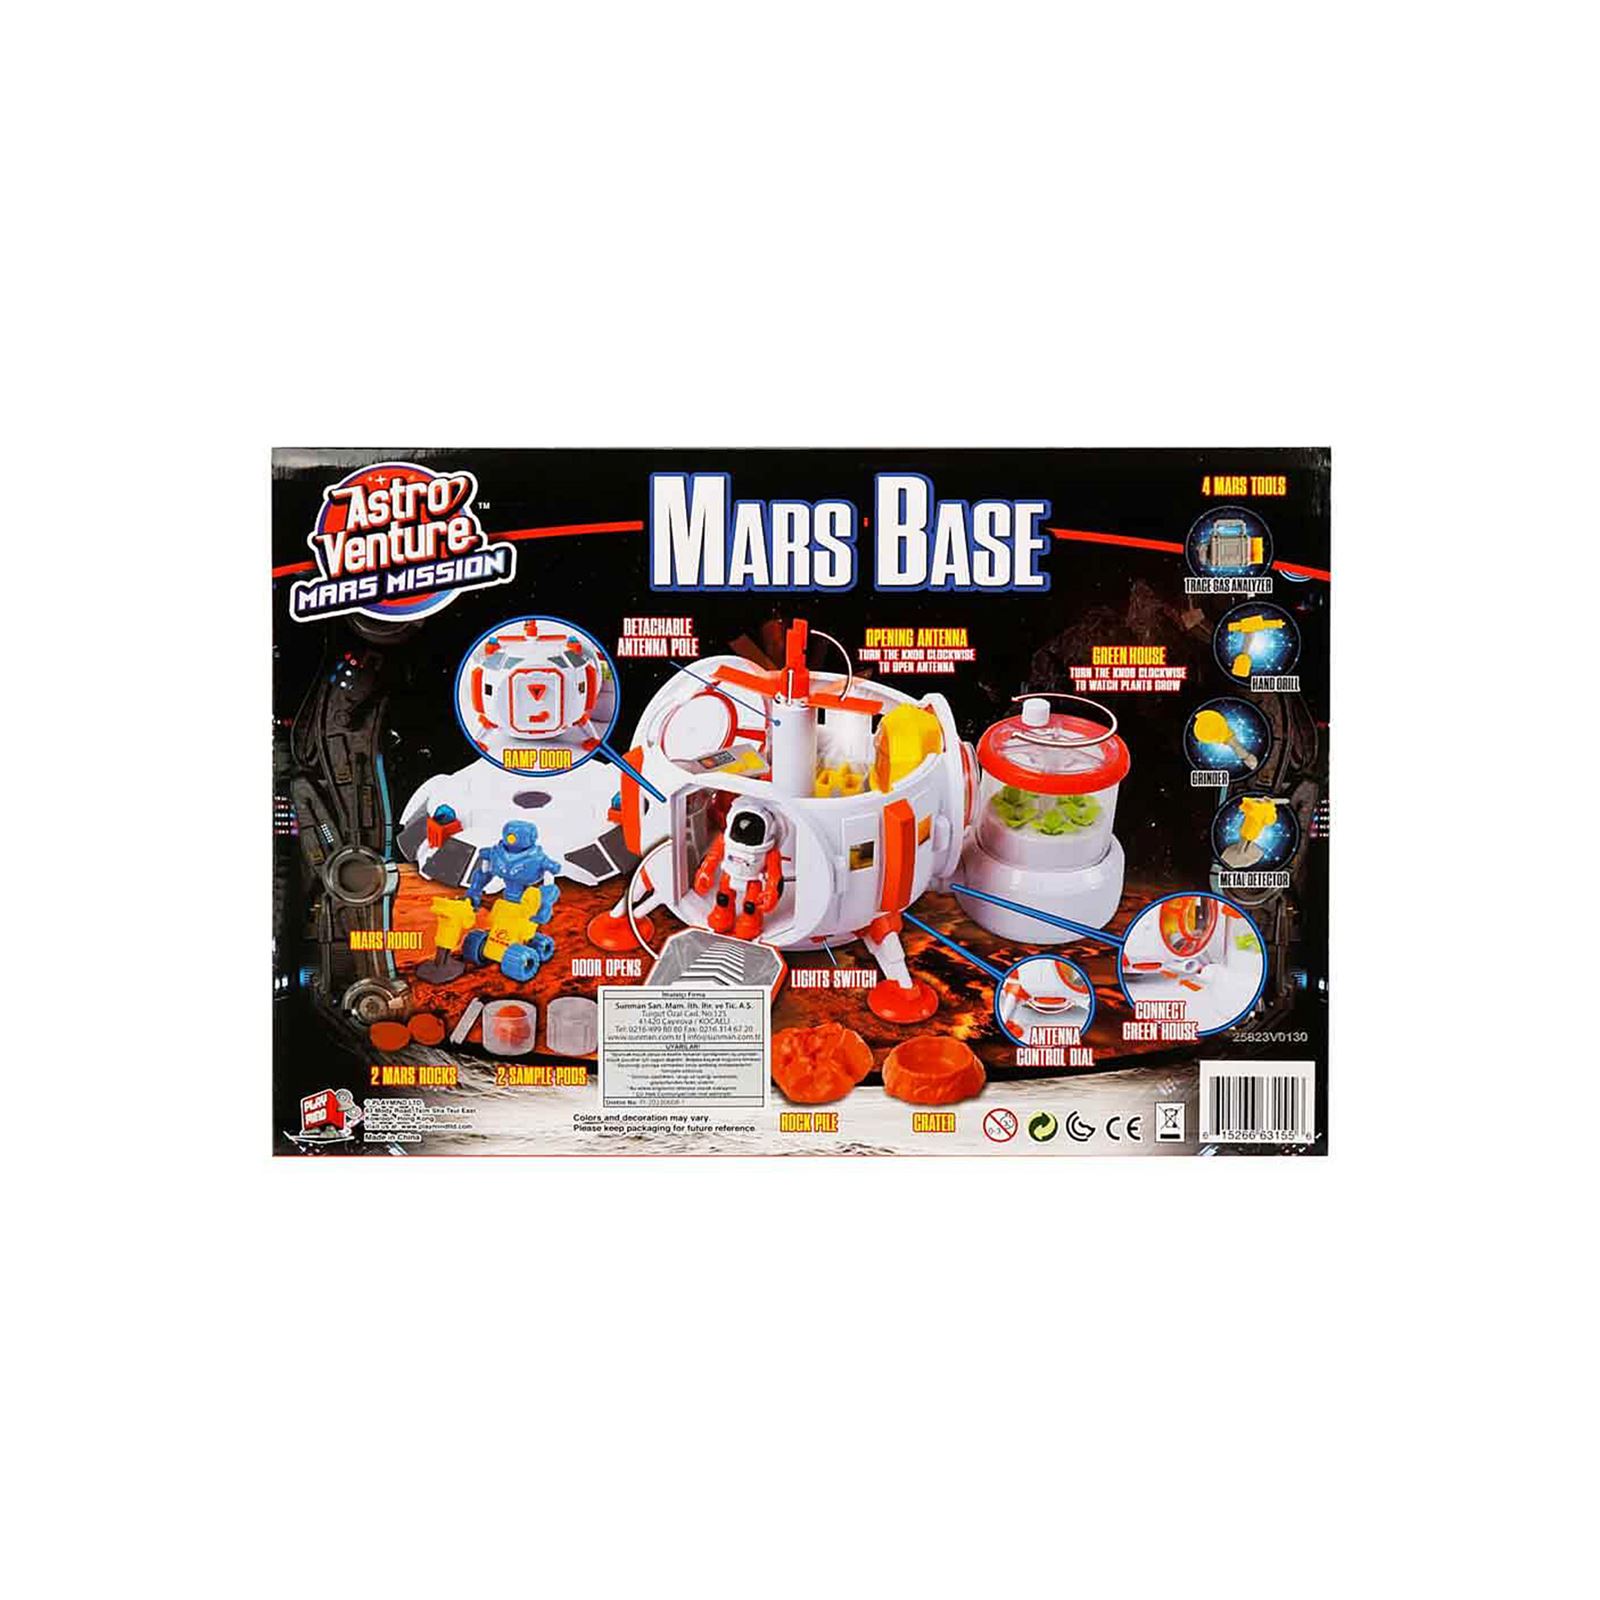 Playmind Astro Venture Mars Mission: Mars Base Beyaz